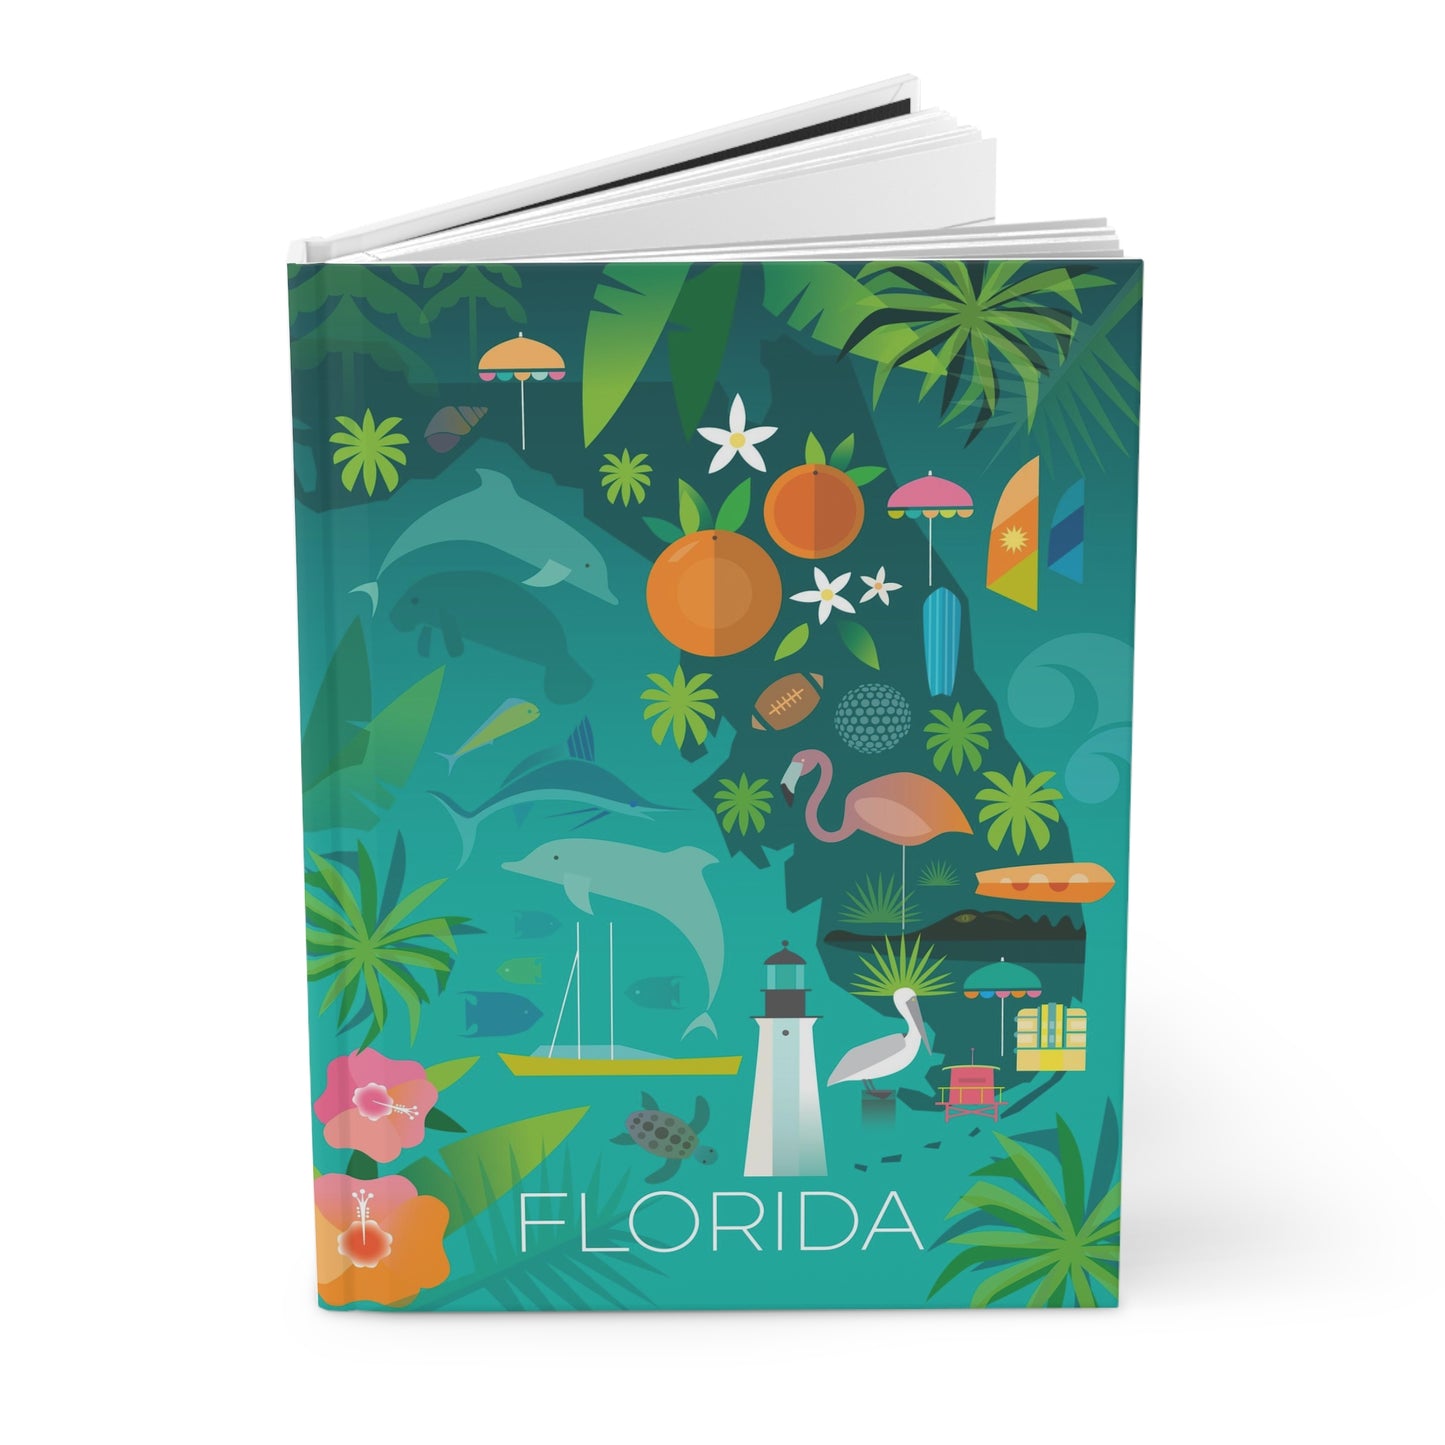 Florida Hardcover Journal